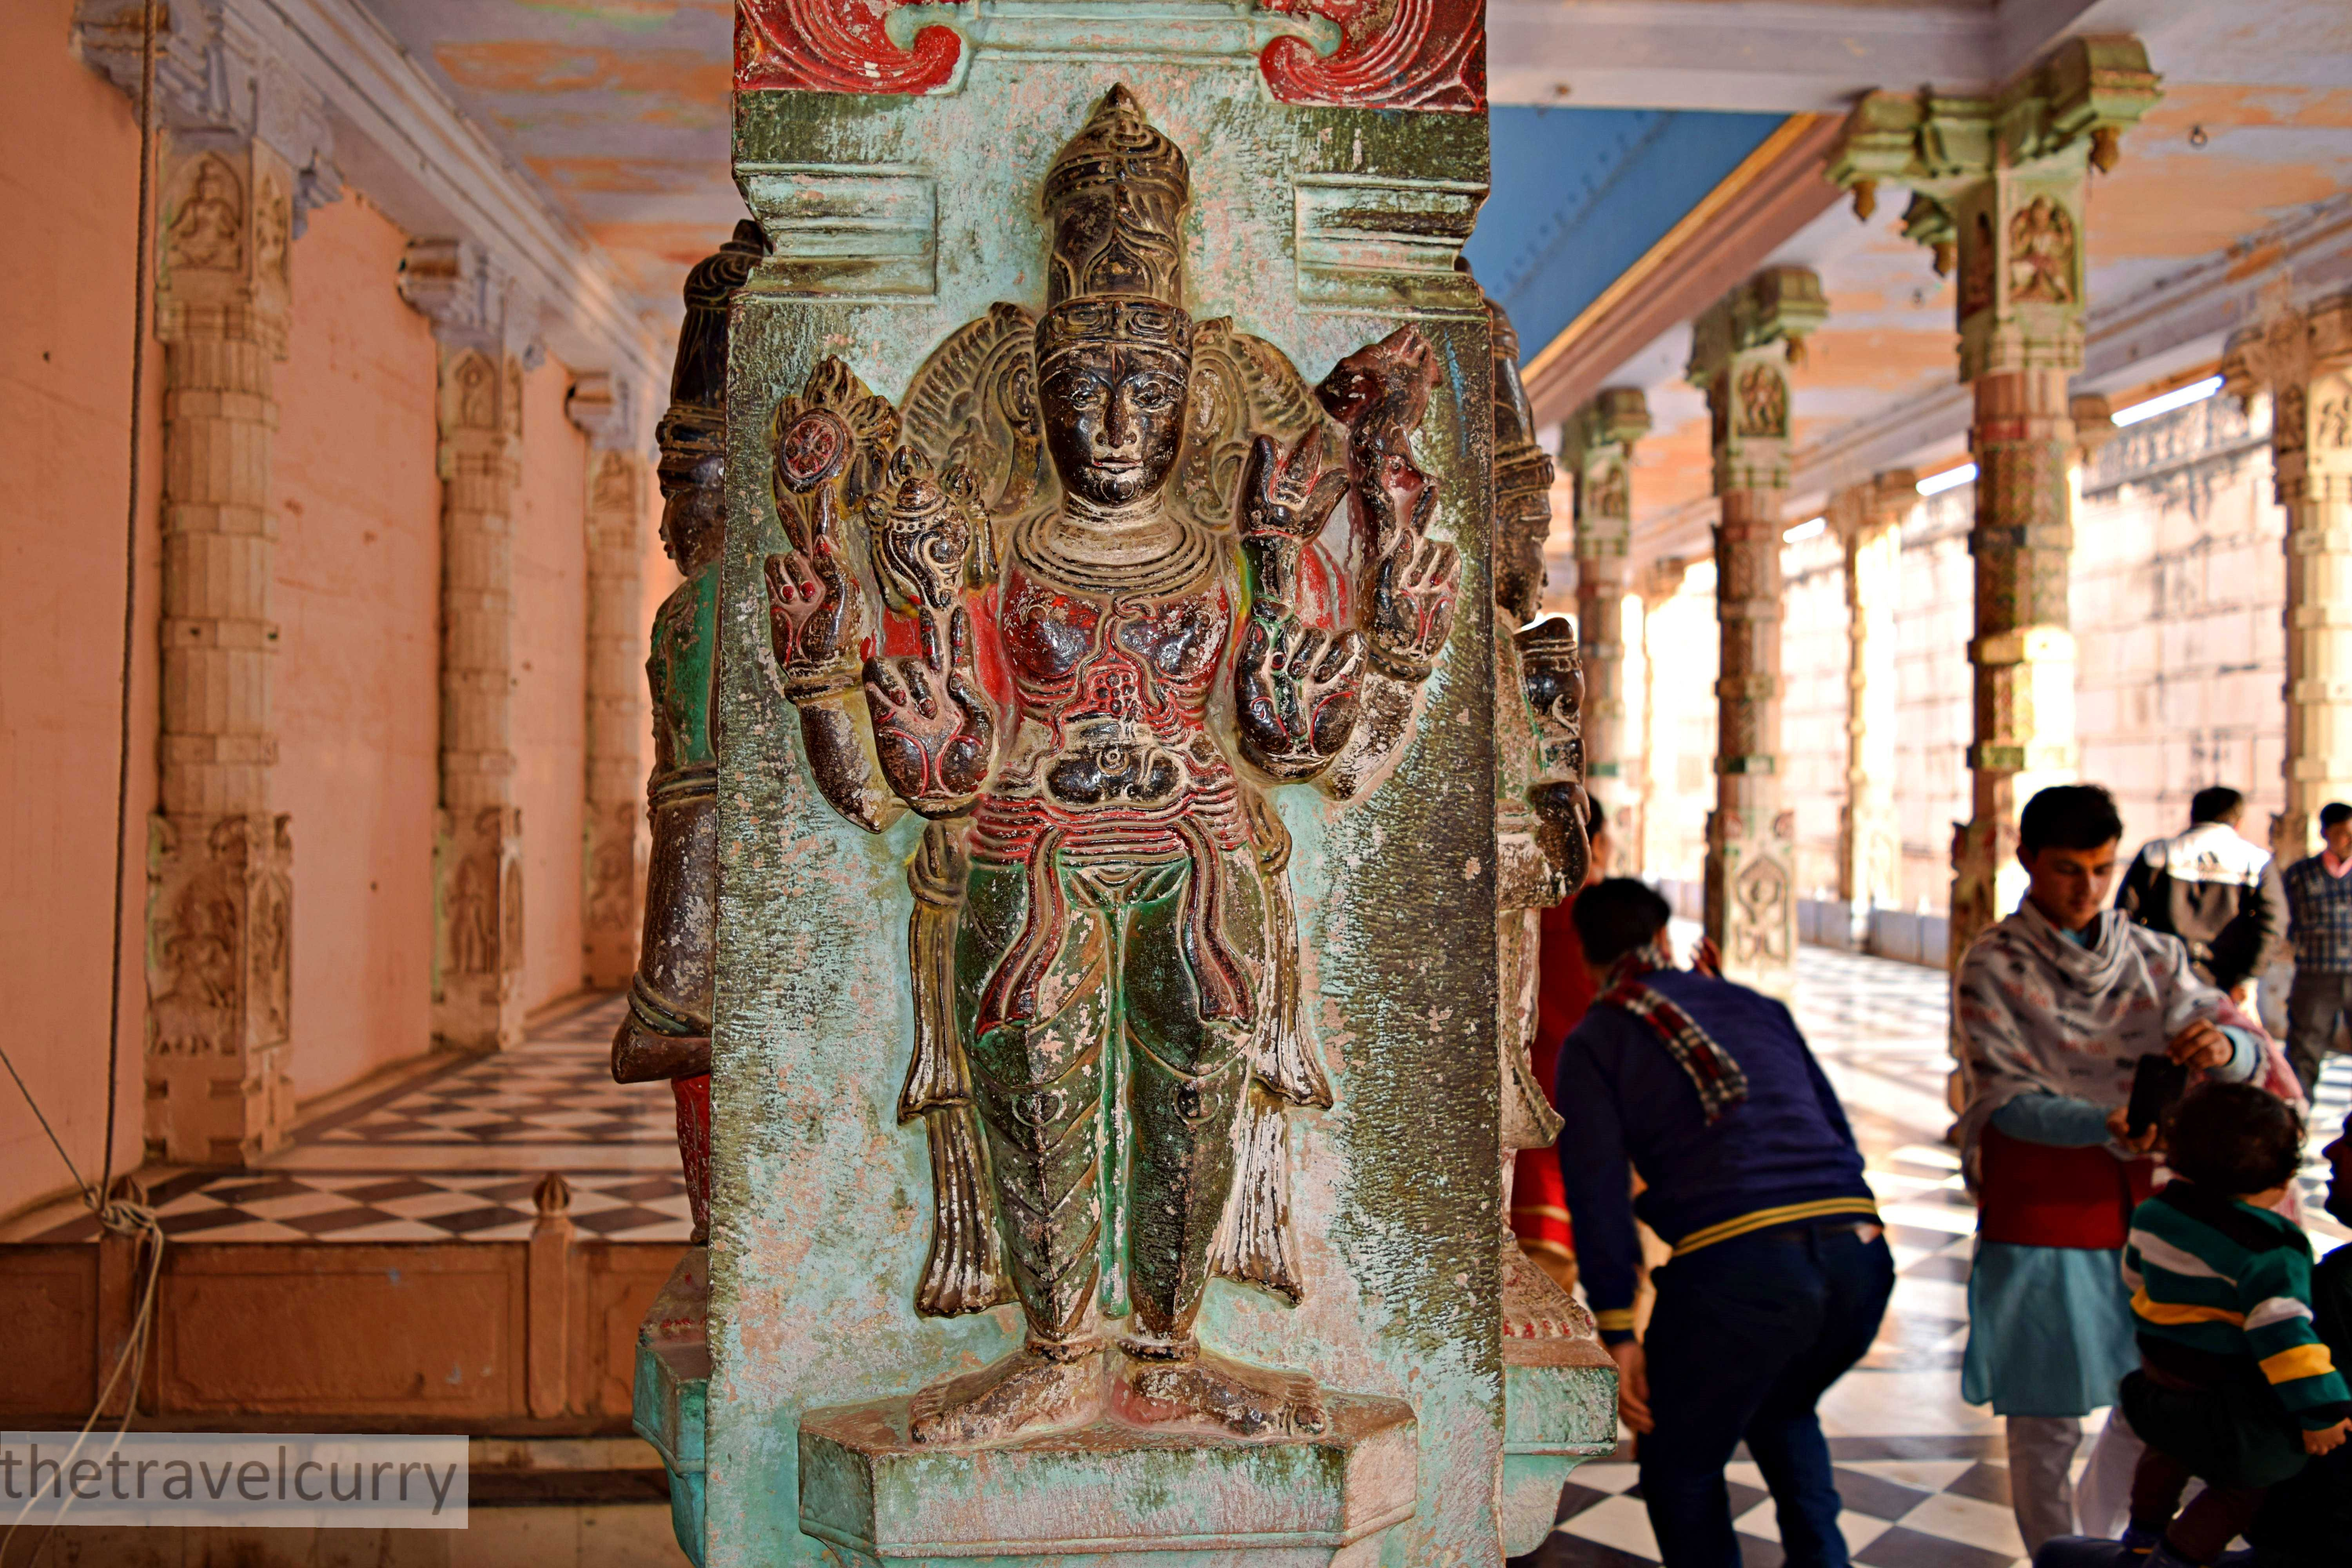 Lord Vishnu's sculpture 